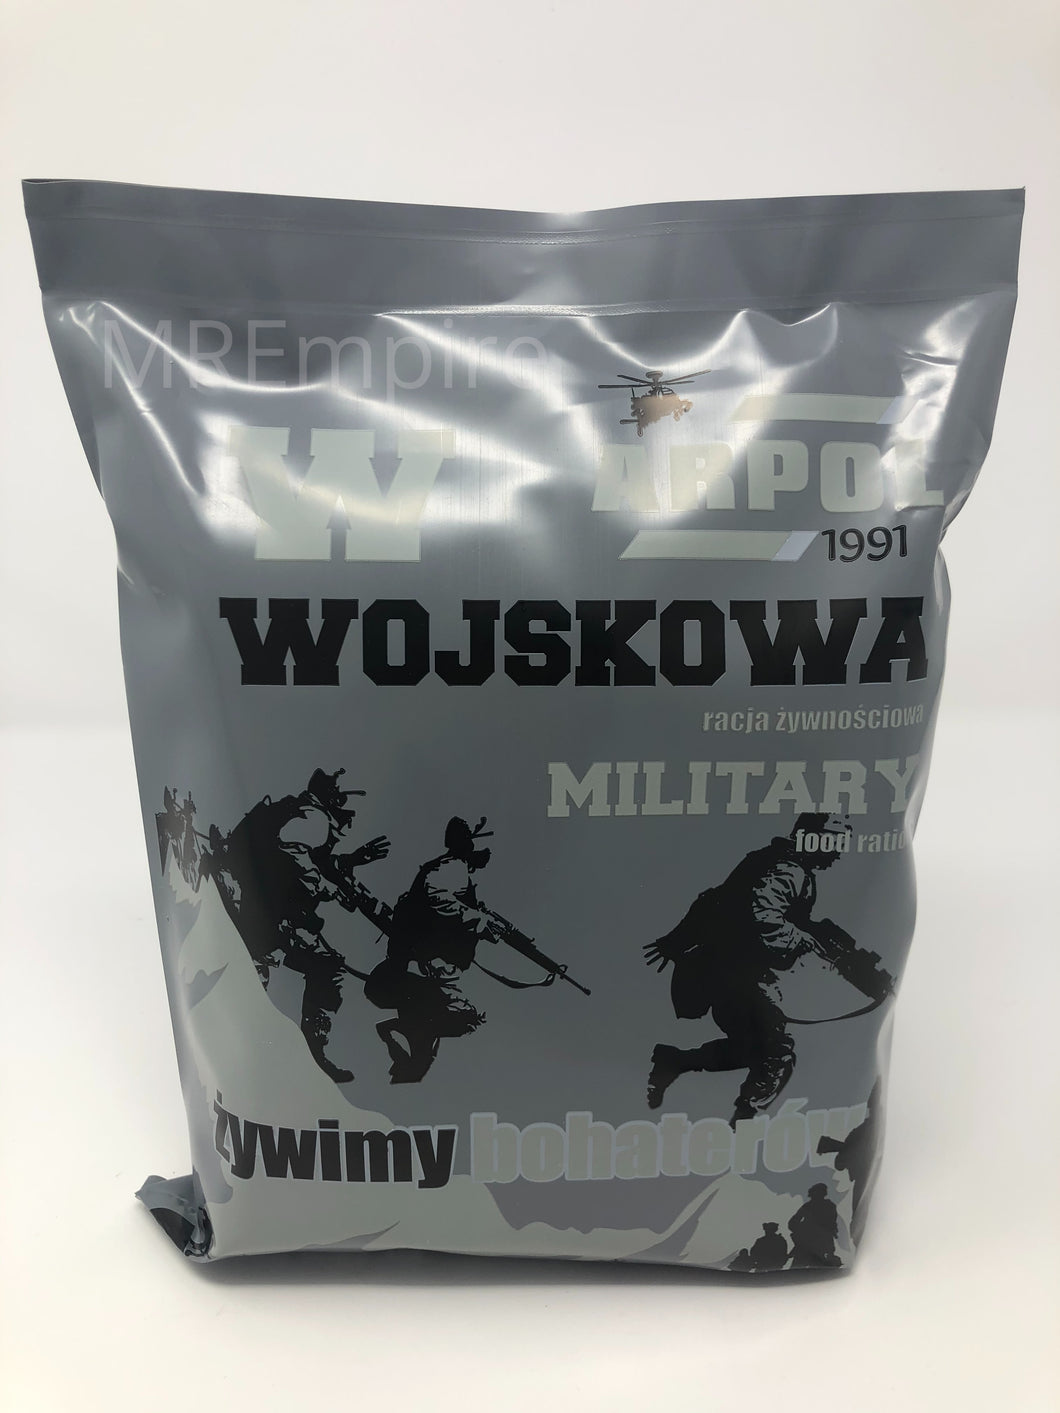 Polish 'Military' food ration - W